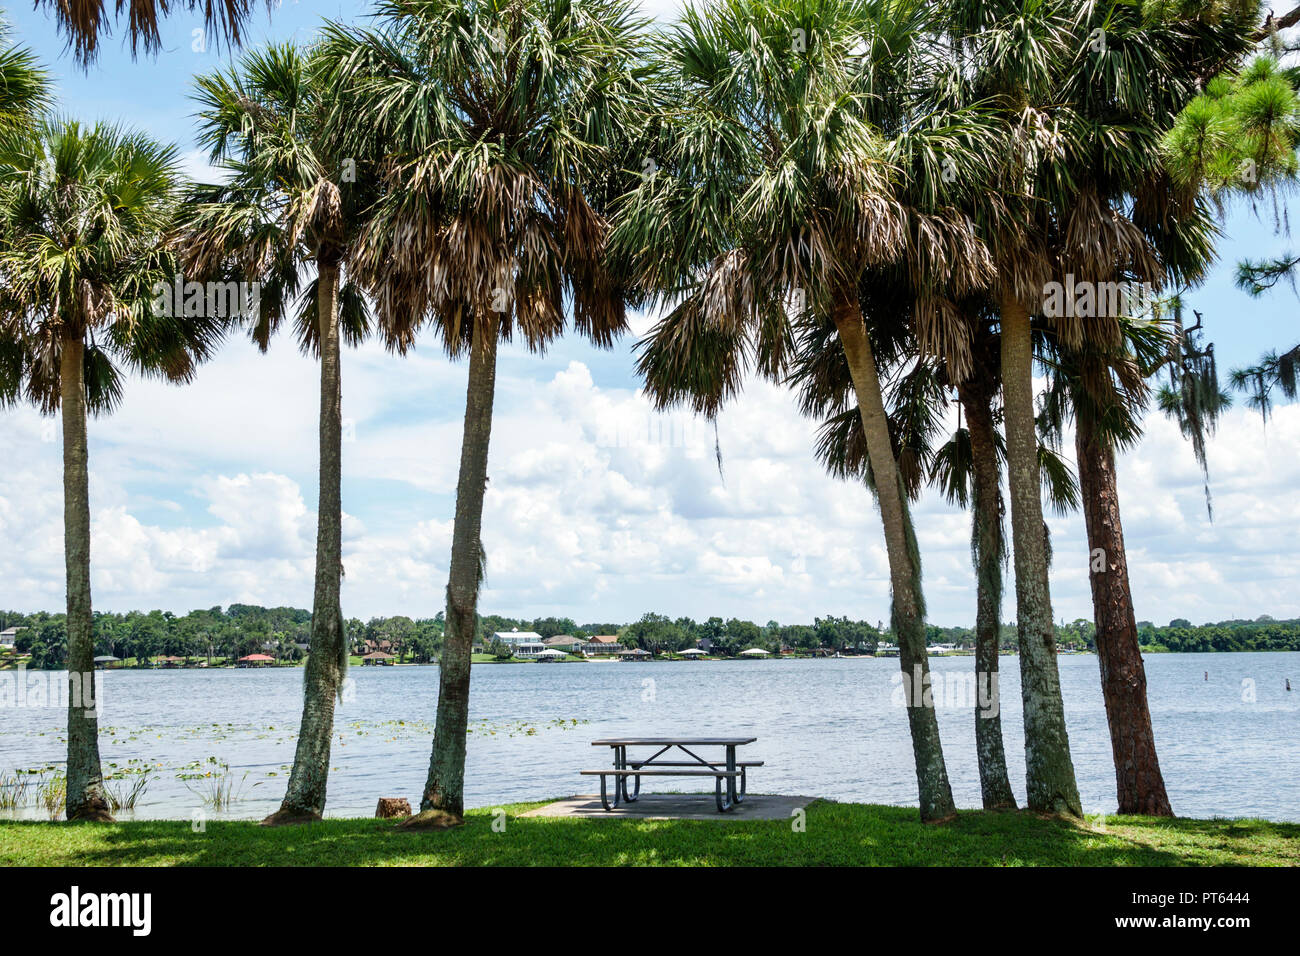 Florida,Lake Placid,Lake June-in-Winter,H. L. Bishop Park,picnic table,sabal palm trees,FL180731241 Stock Photo